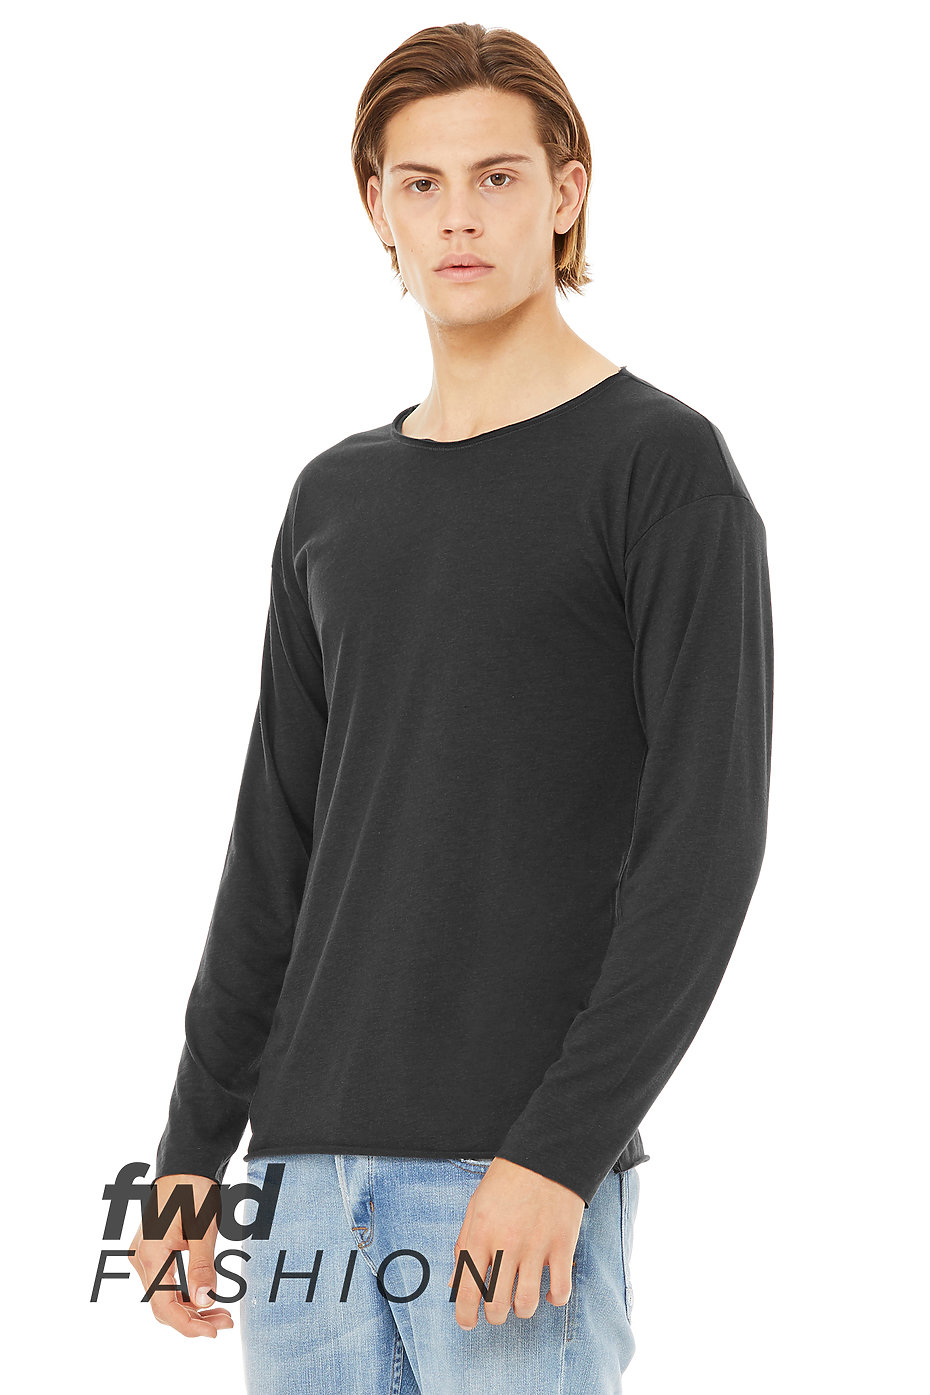 Bella+Canvas Unisex Triblend Long Sleeve V-Neck T-Shirt